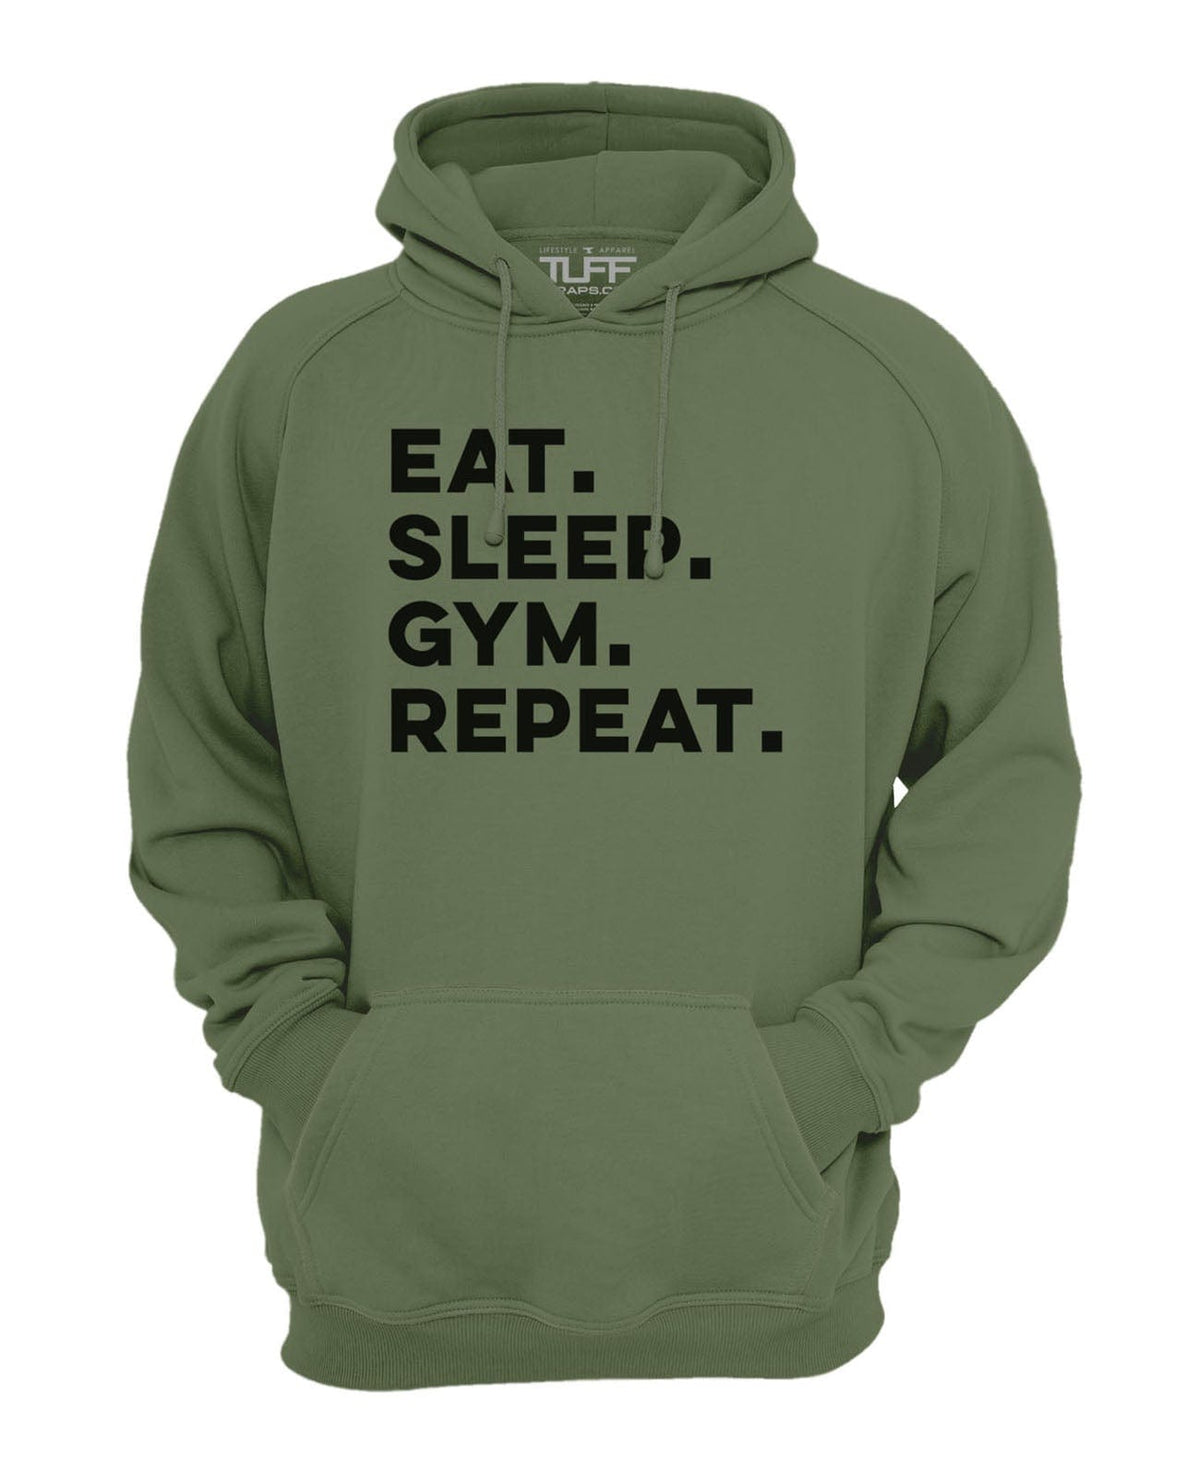 Eat. Sleep. Gym. Repeat. Hooded Sweatshirt XS / Military Green TuffWraps.com